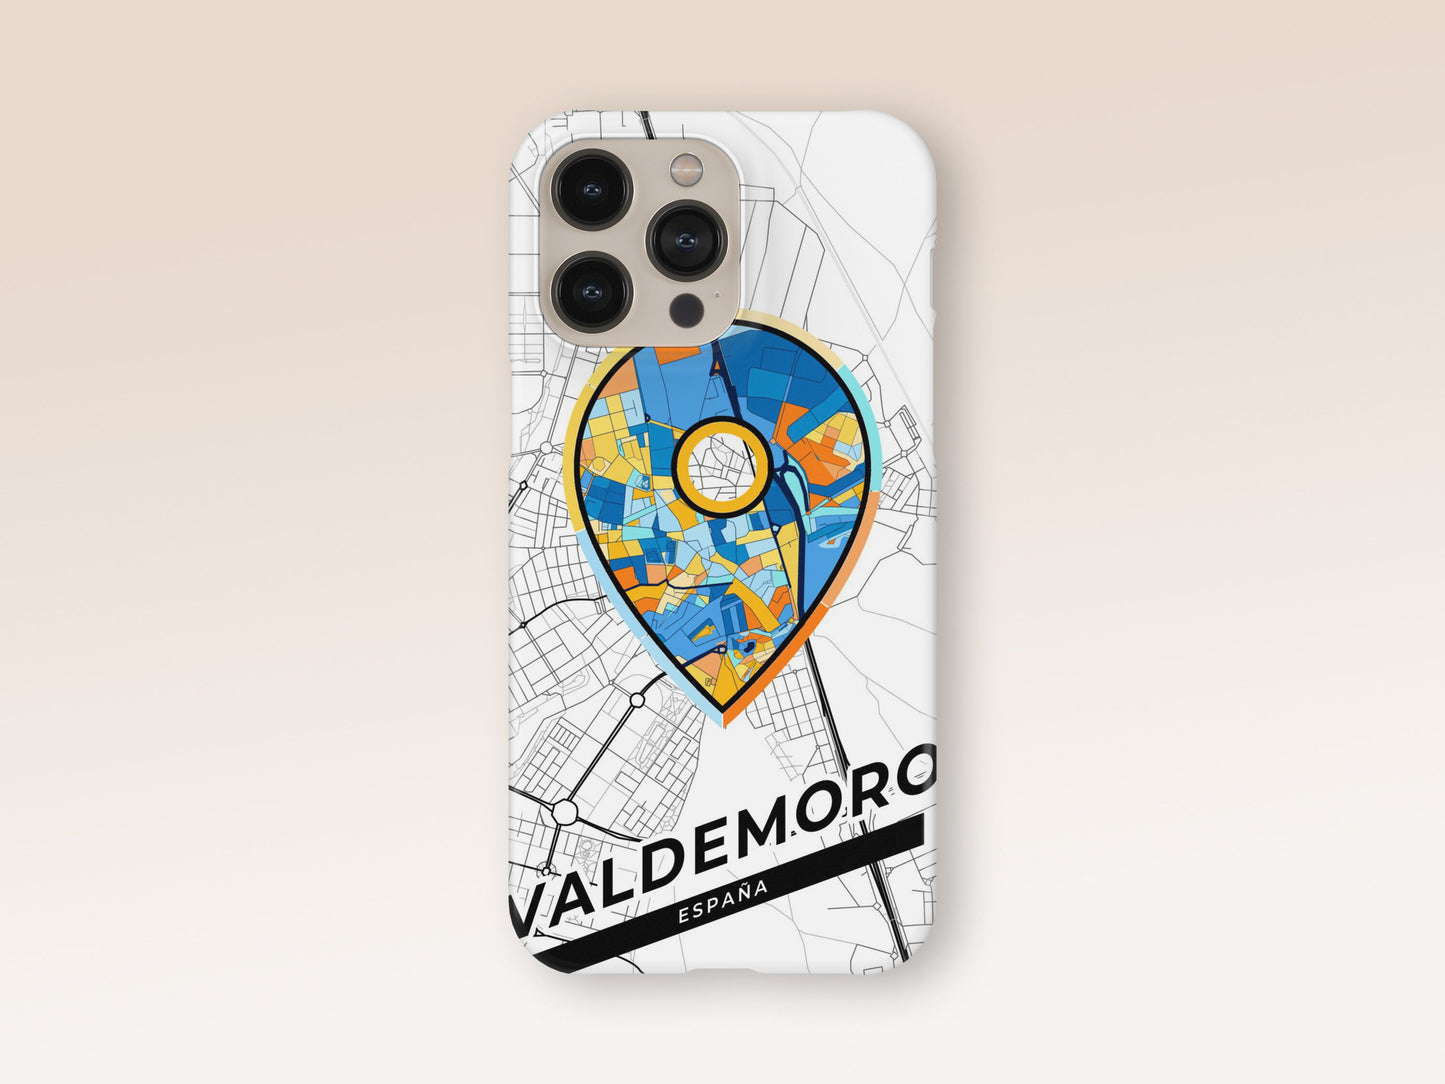 Valdemoro Spain slim phone case with colorful icon 1